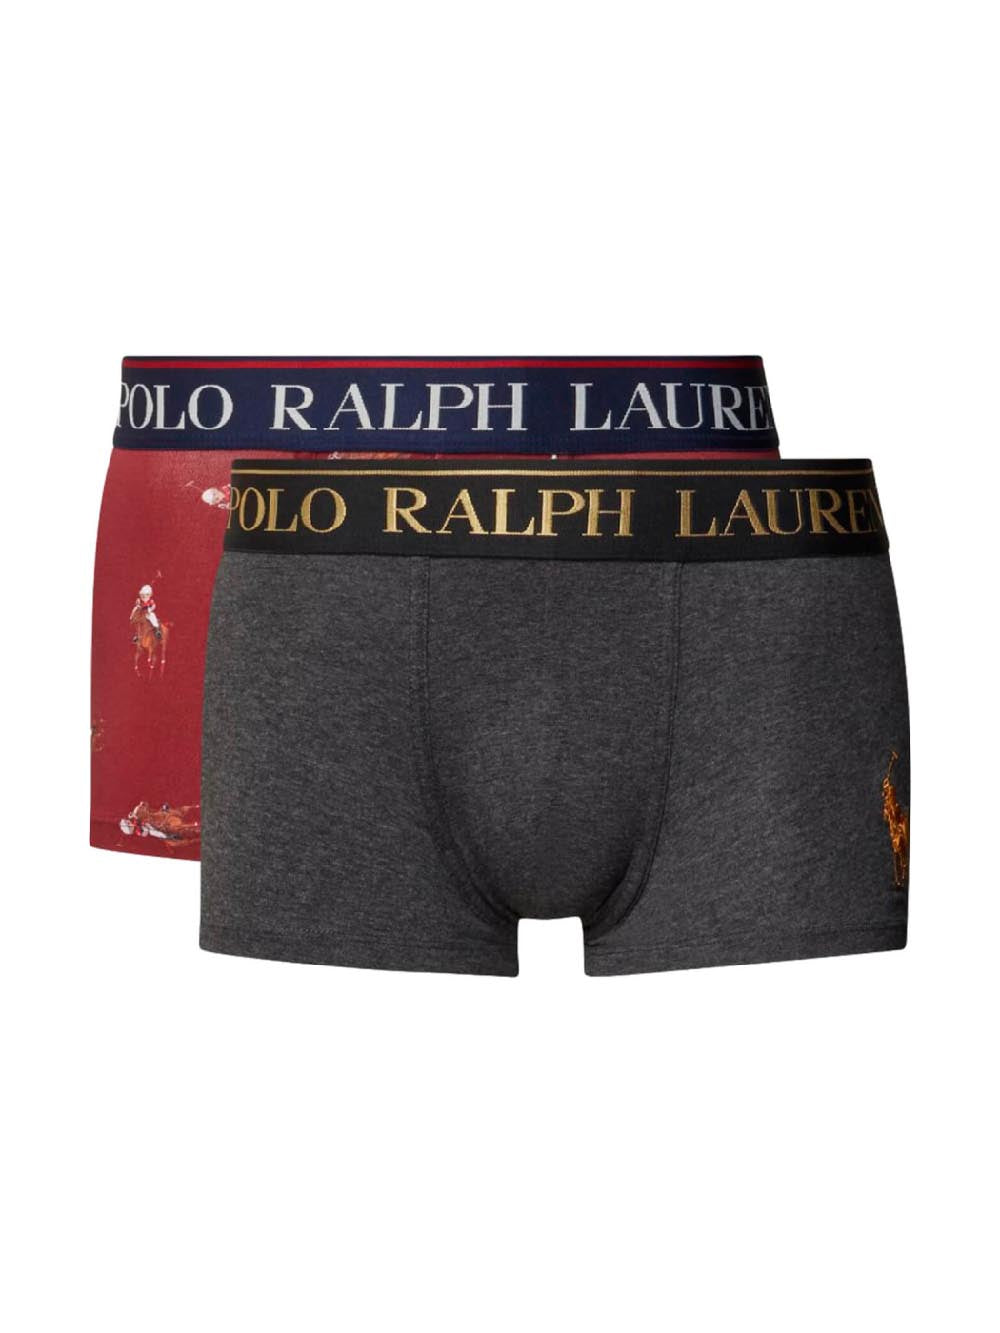 Polo Ralph Lauren Boxer Uomo Grigio bordò